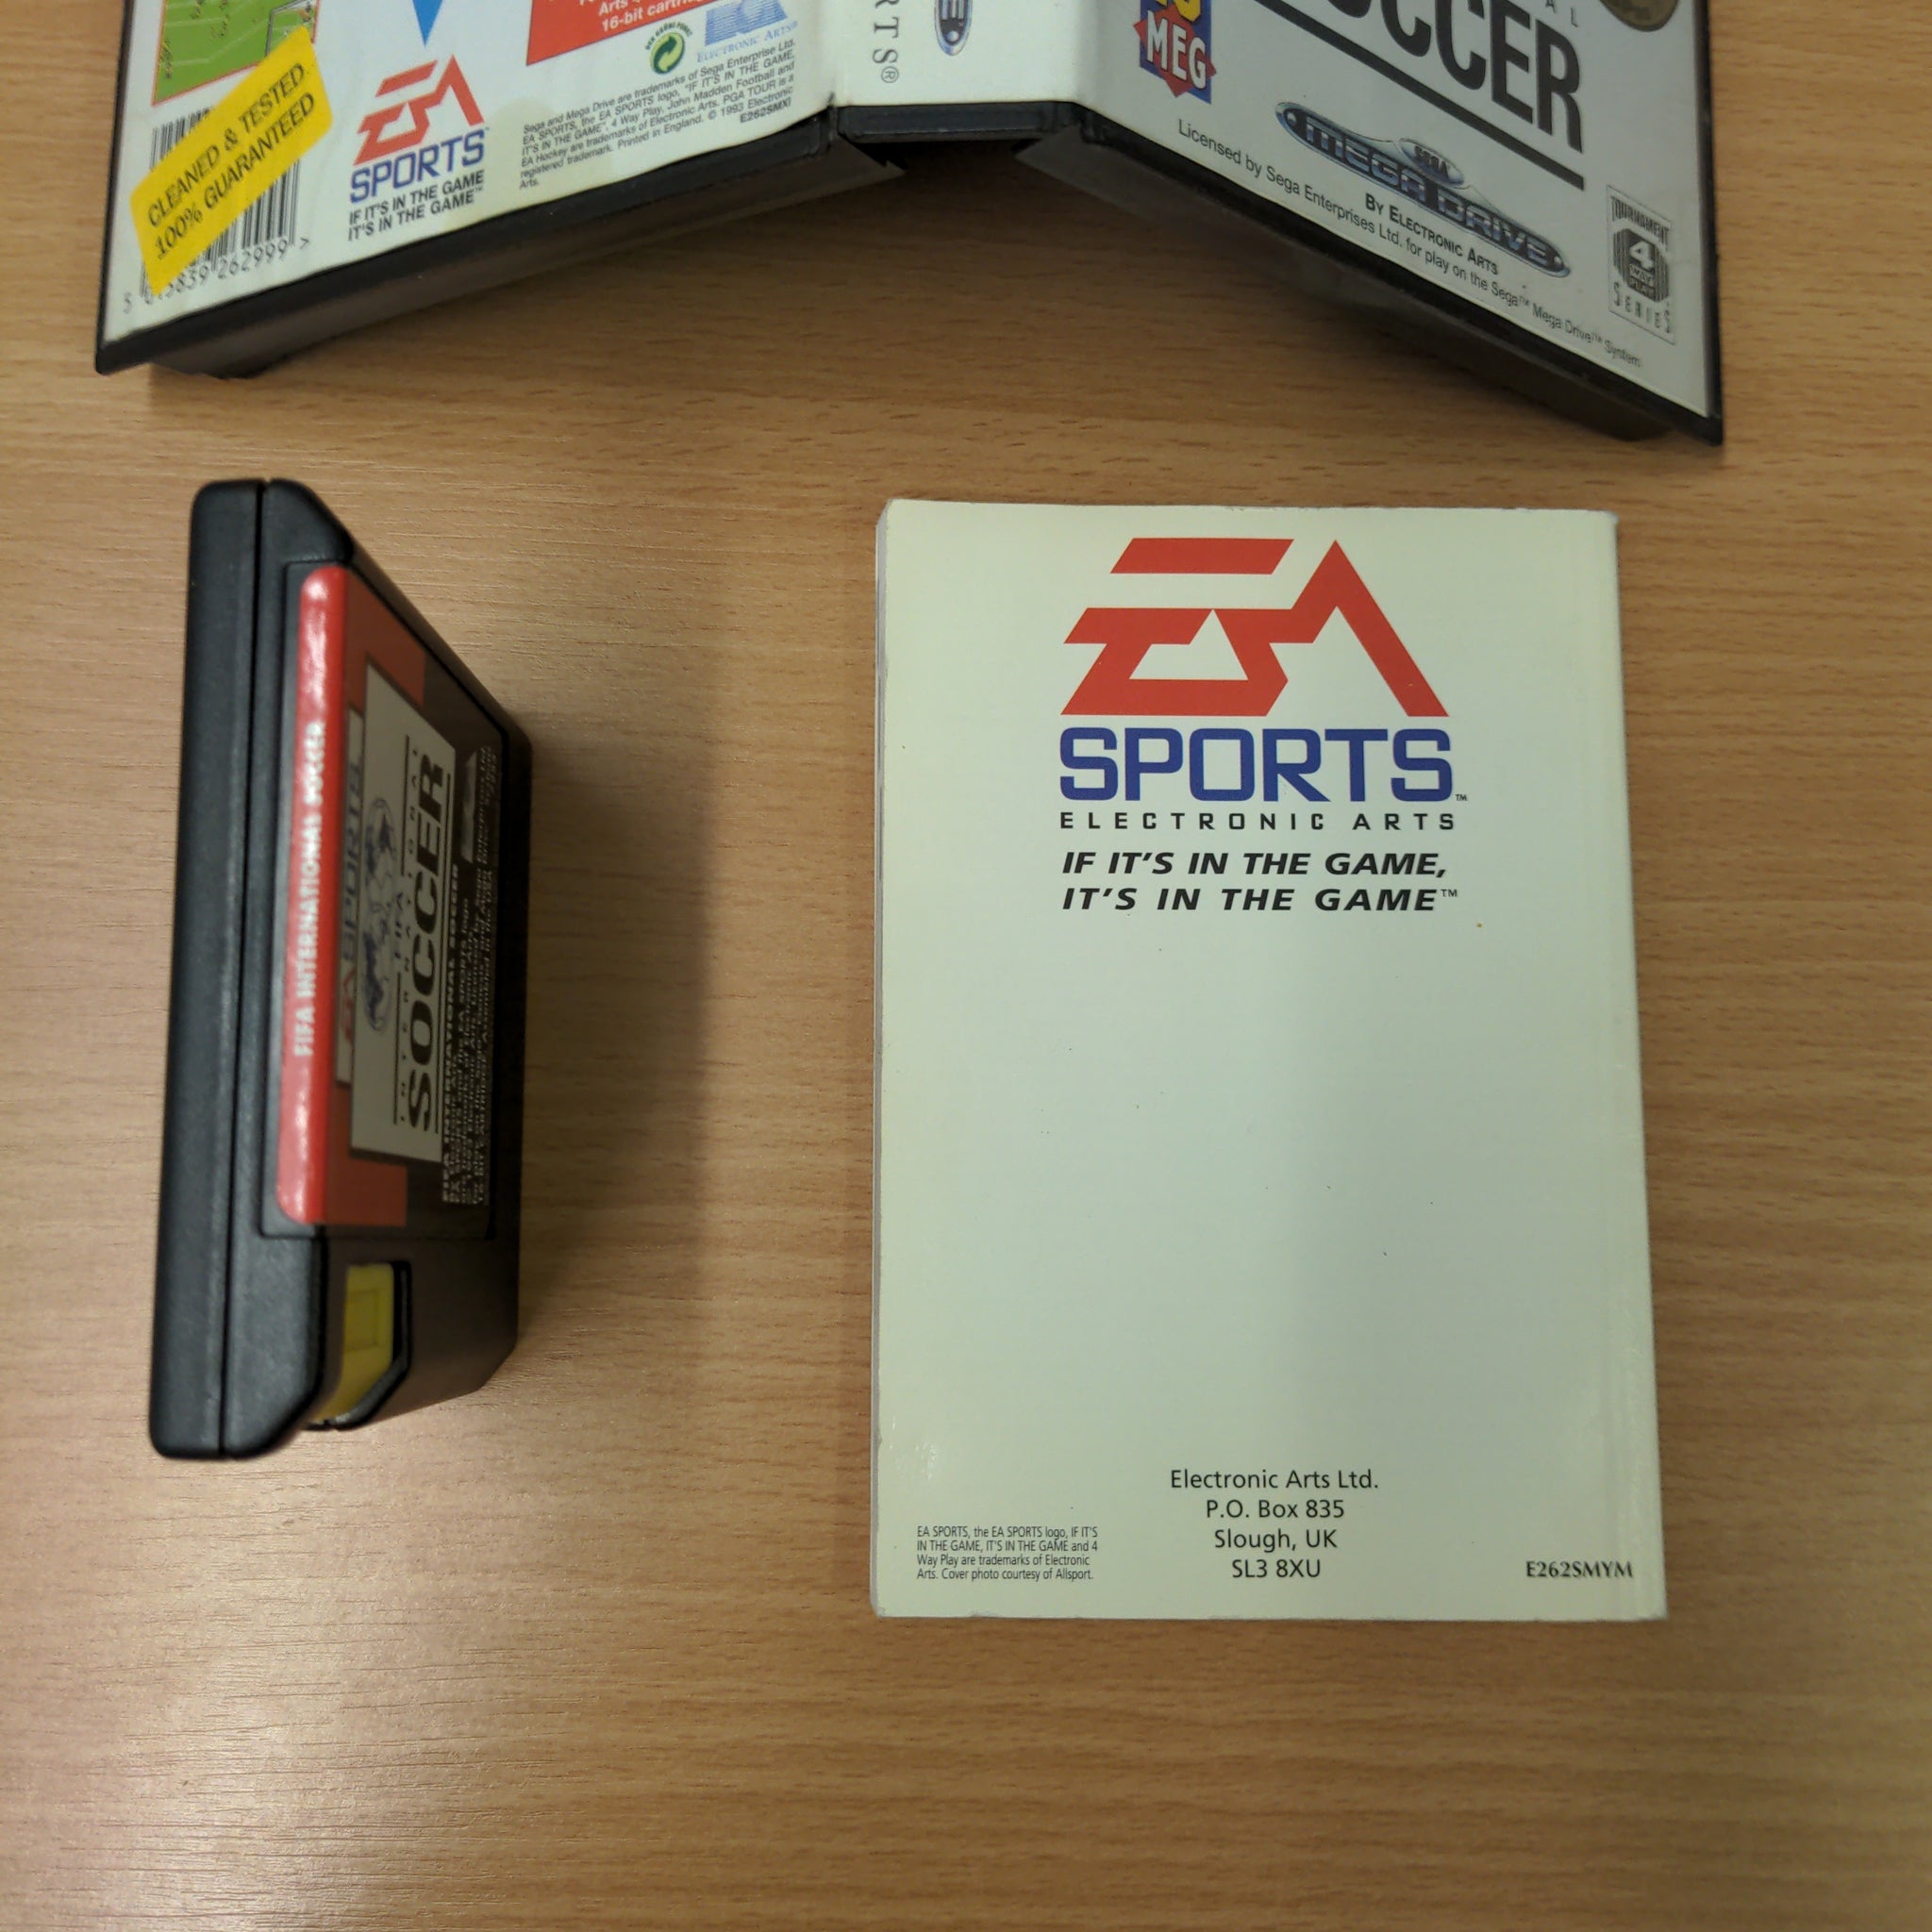 FIFA International Soccer Sega Mega Drive game complete